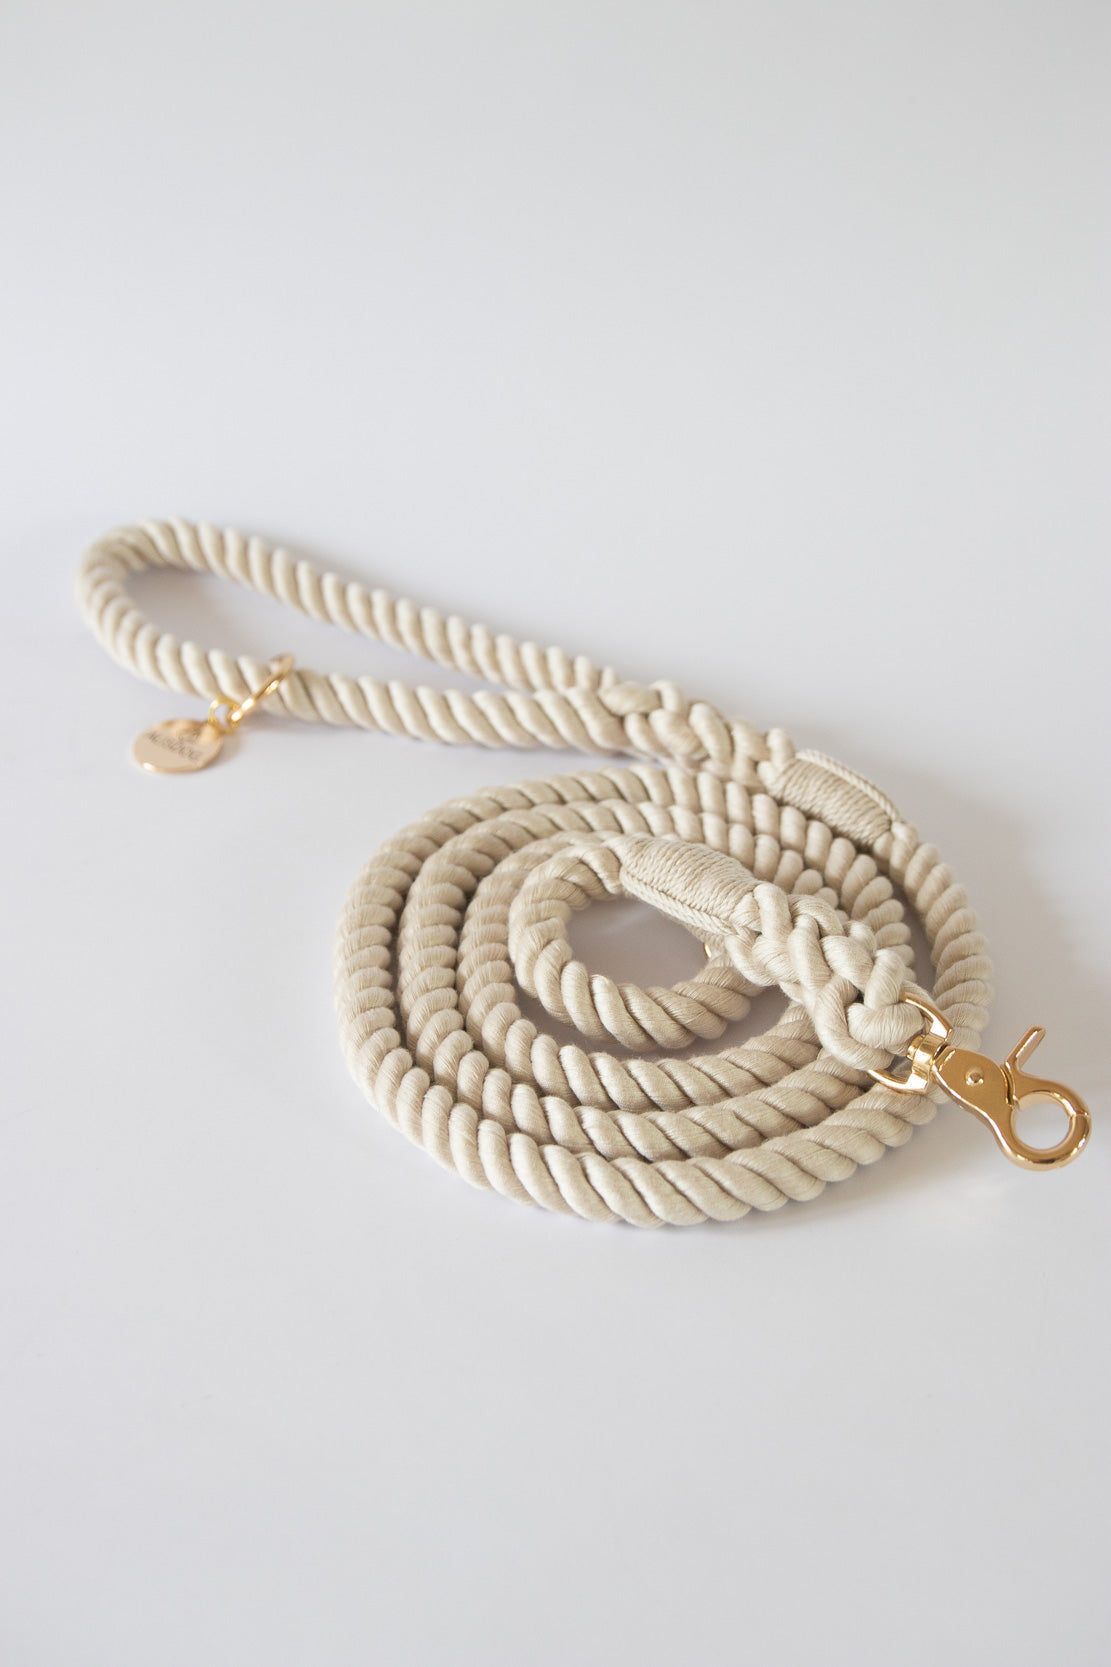 Pearl Rope leash 180 cm long